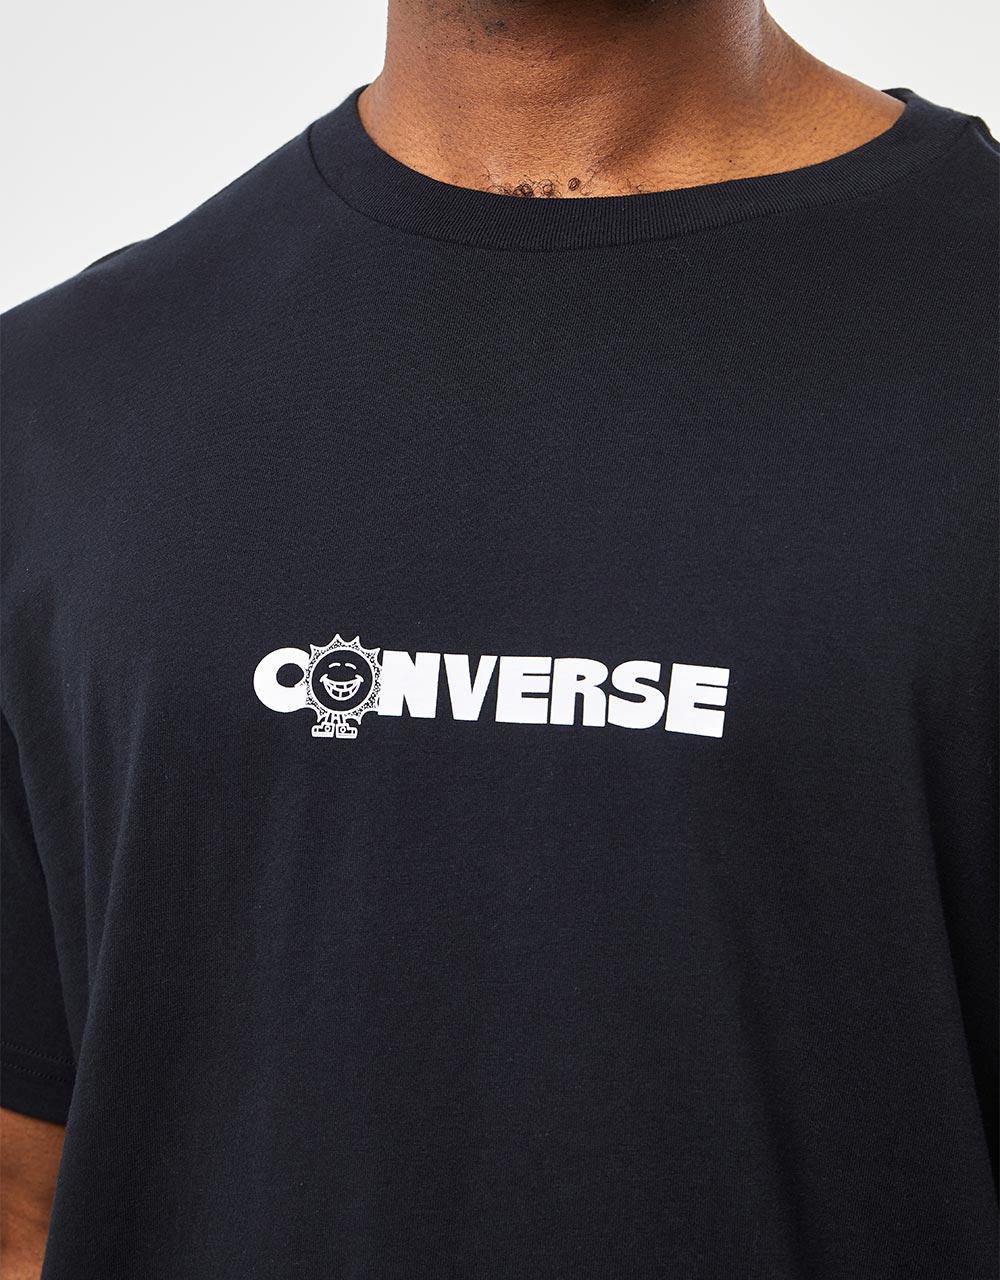 Converse Earth Moon Sun T-Shirt - Black